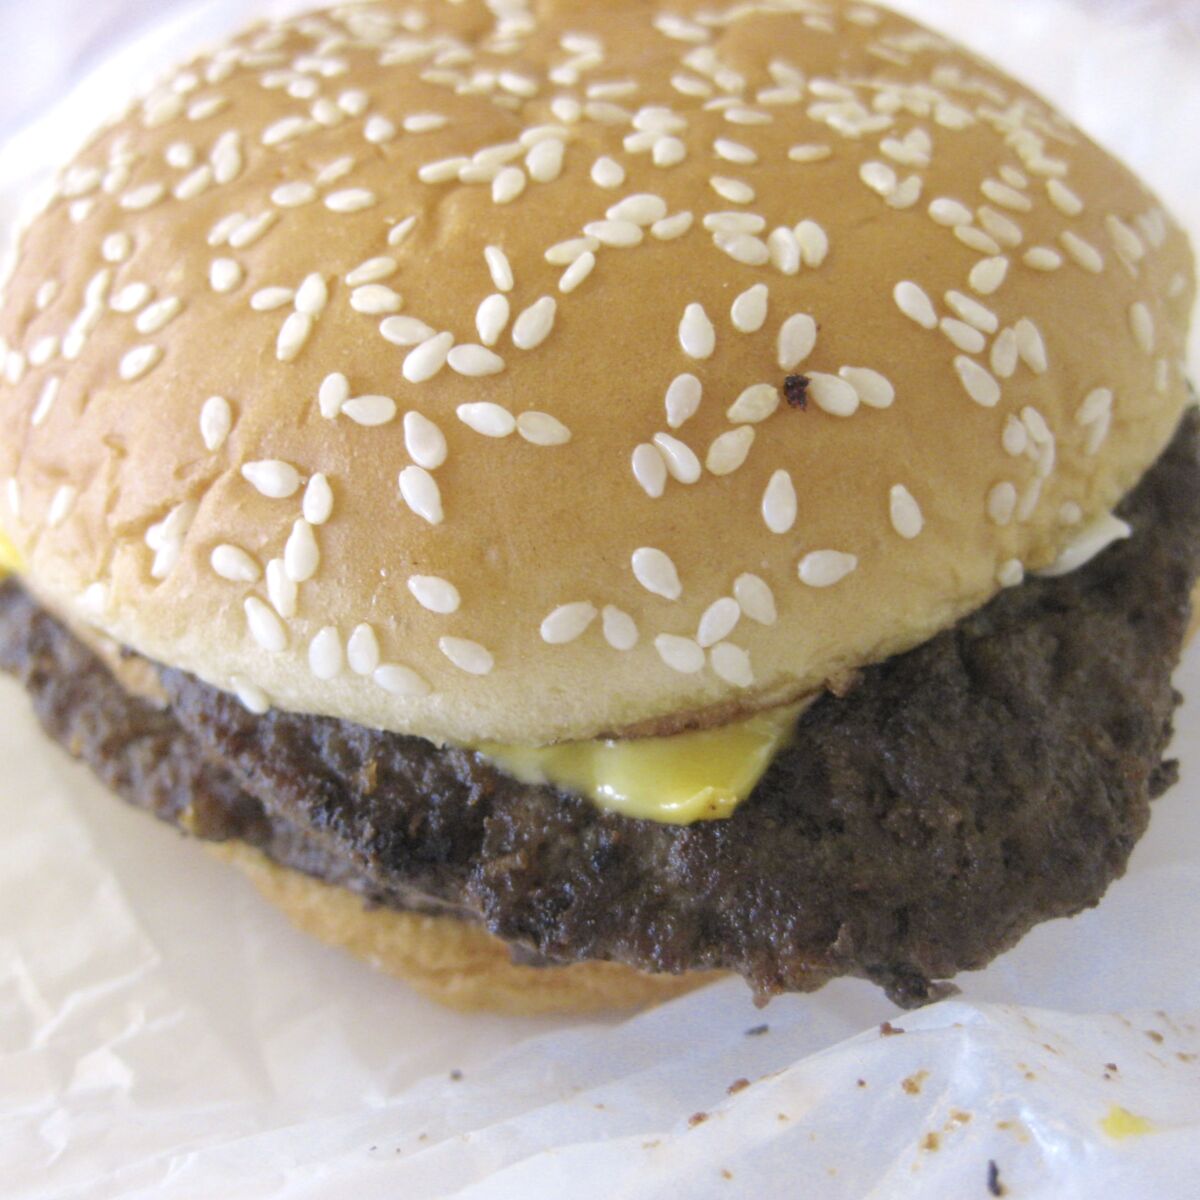 Chubby Decker Burger from Zesto in Atlanta, Georgia